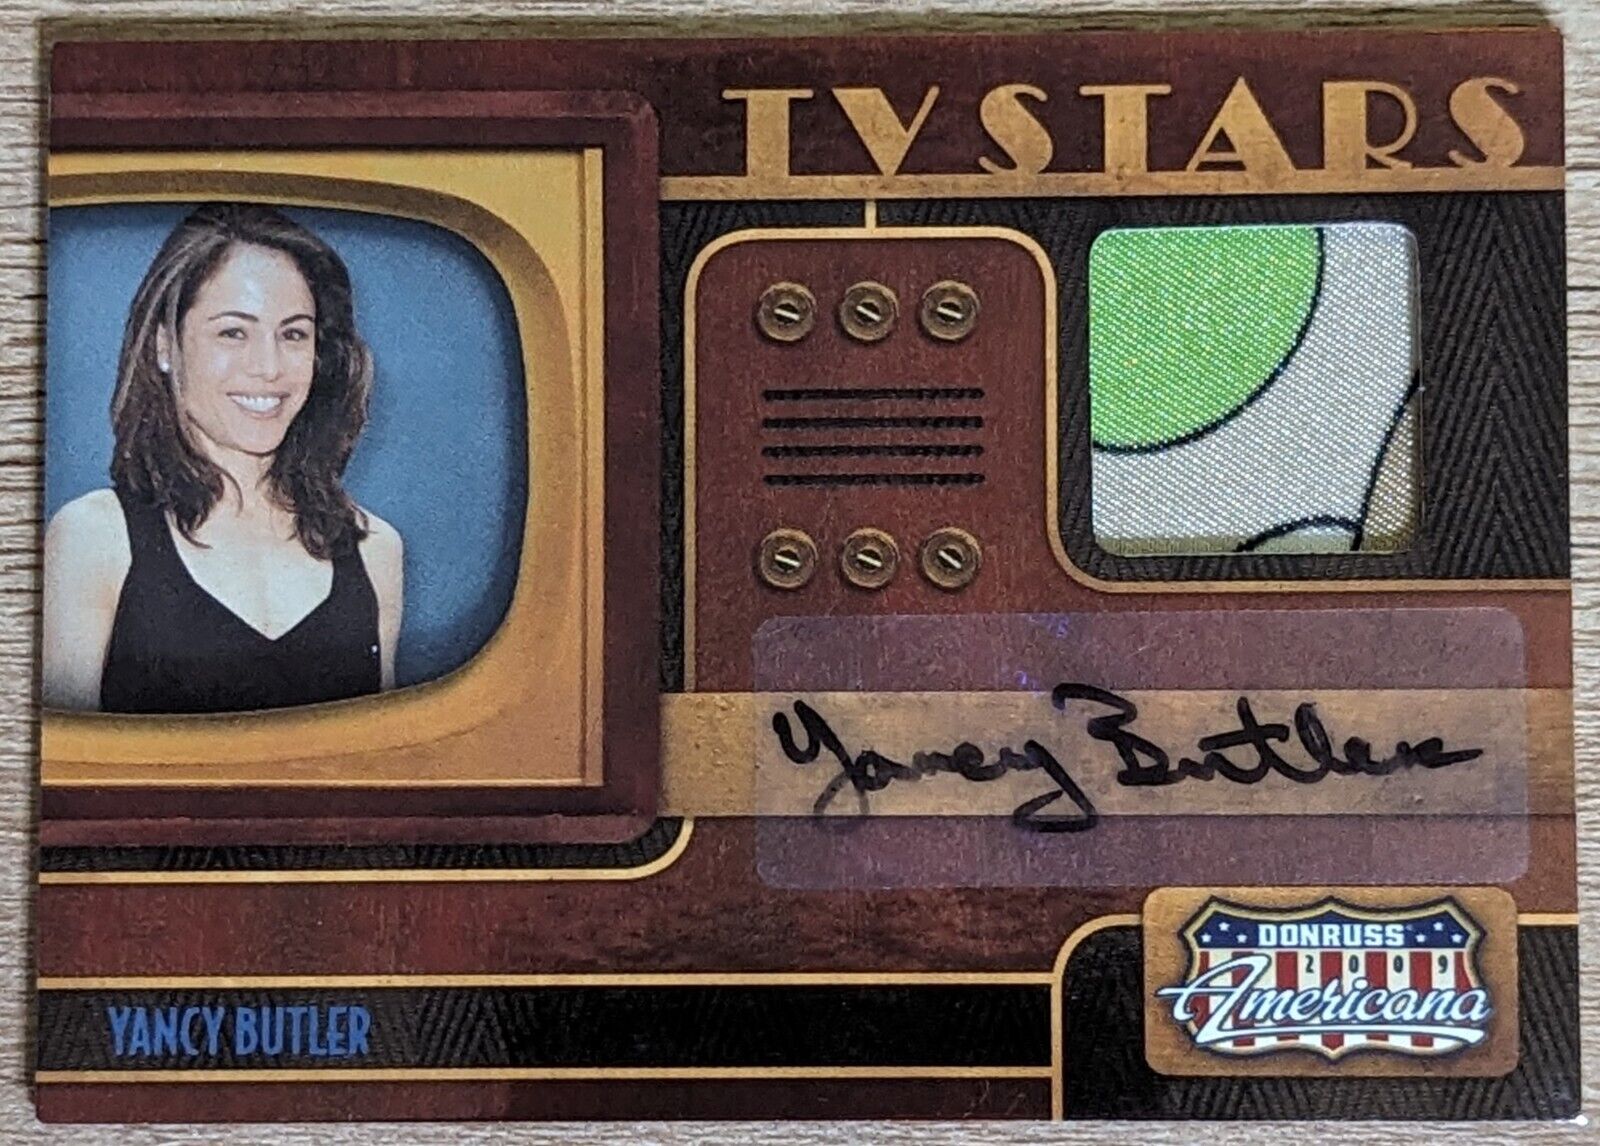 2009 Donruss Americana TV Stars Yancy Butler Autograph Costume Relic Card 26/75